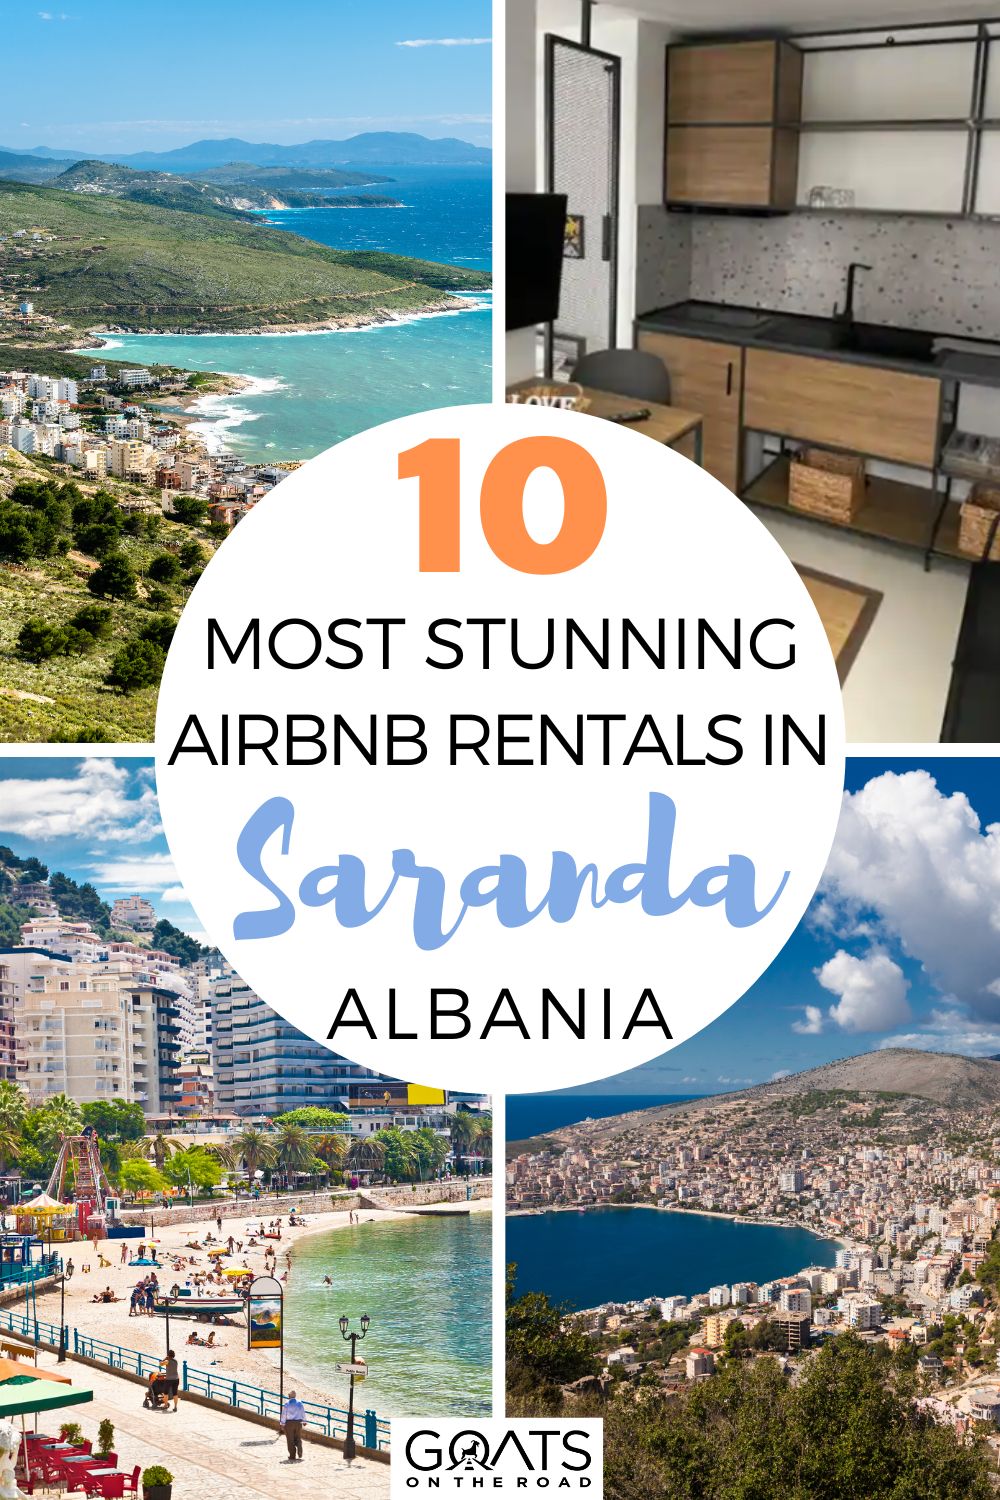 10 Most Stunning Airbnb Rentals in Saranda, Albania